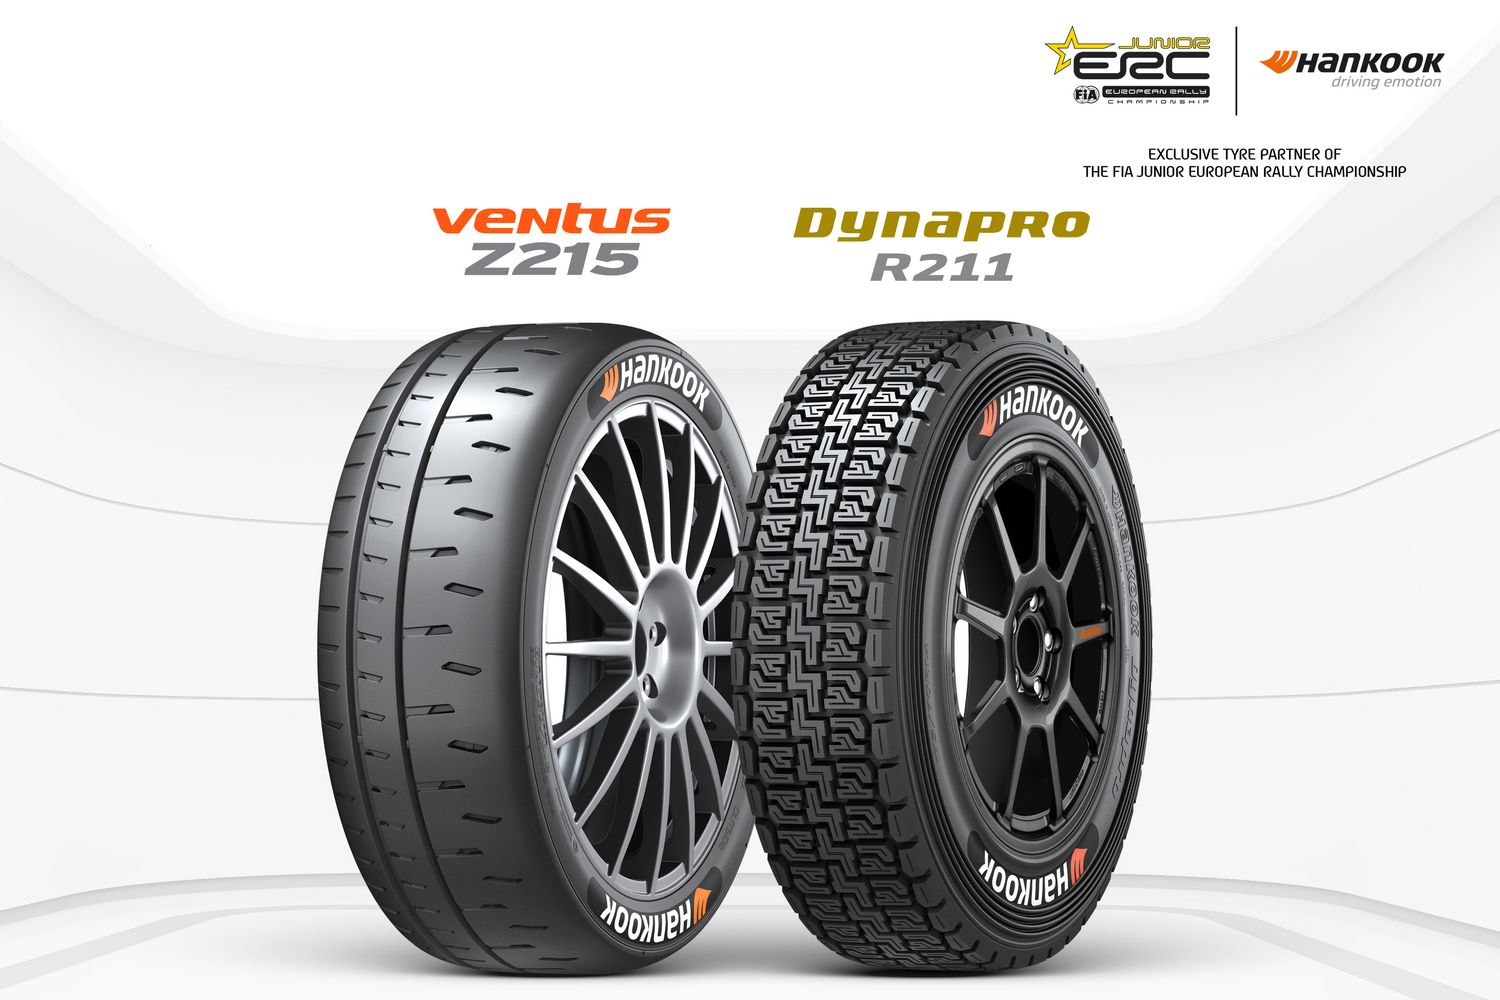 Hankook is exclusive rally tyre partner of the FIA Junior ERC